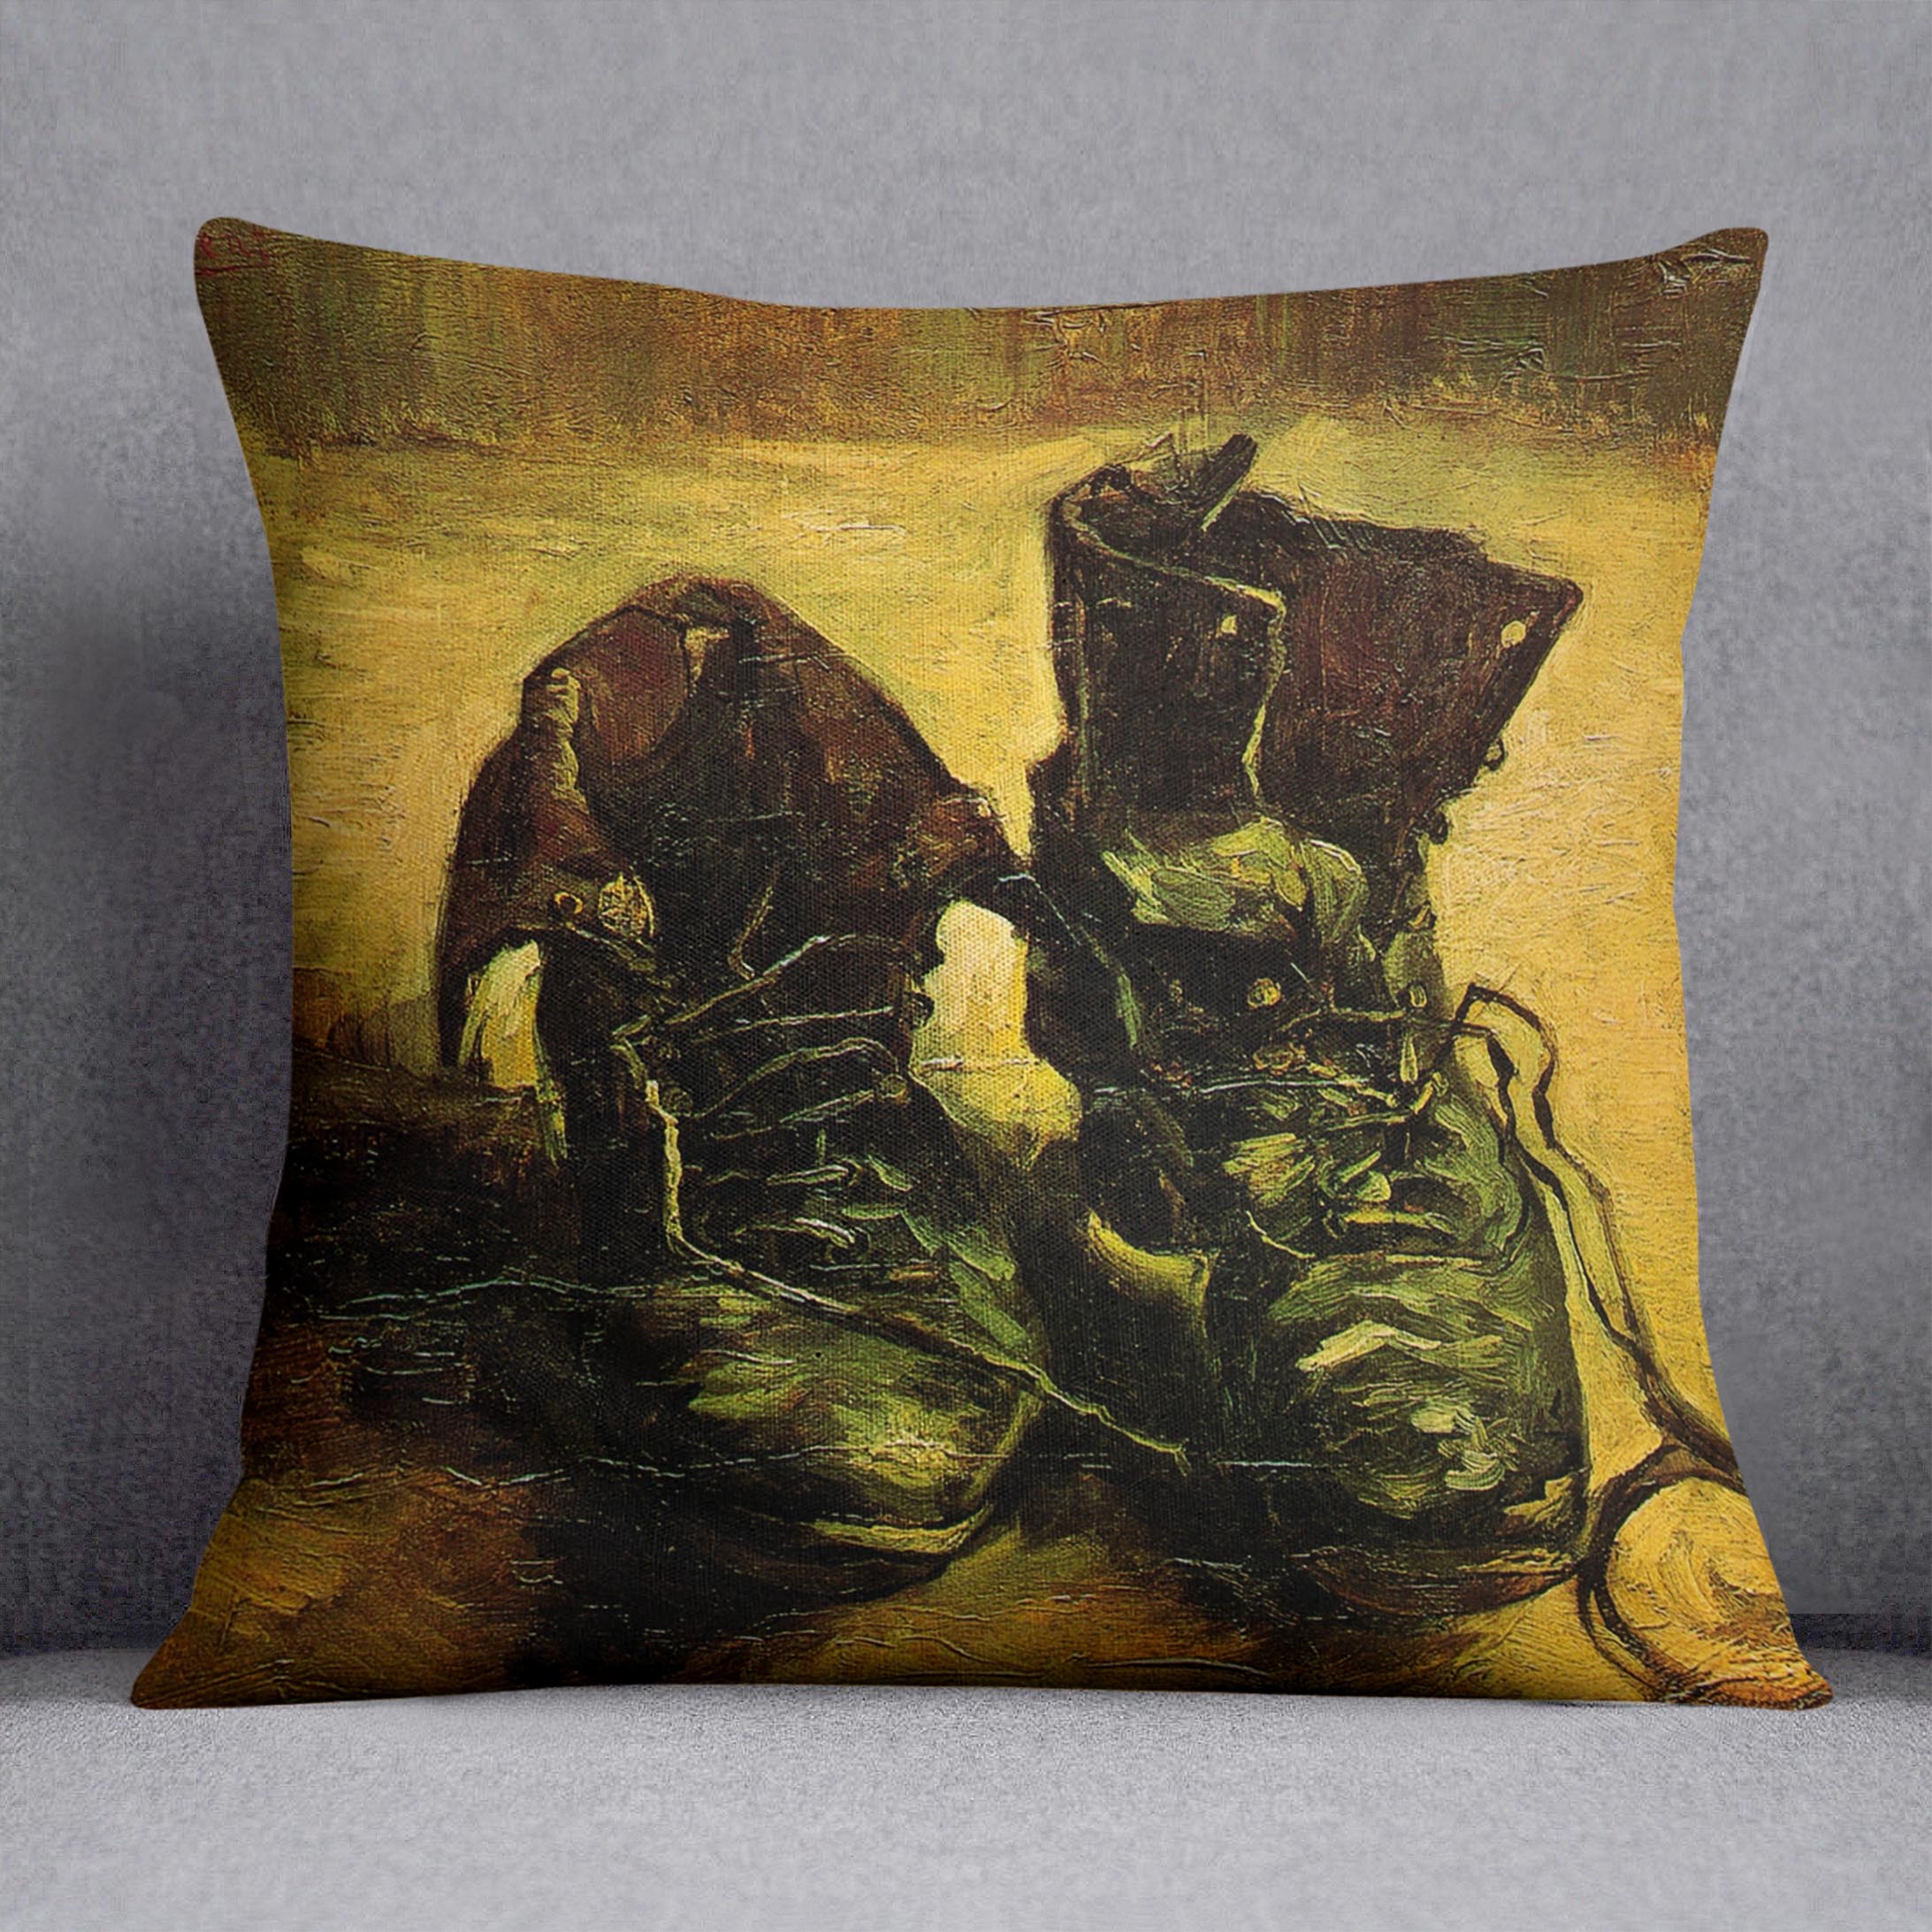 A Pair of Shoes 2 by Van Gogh Cushion